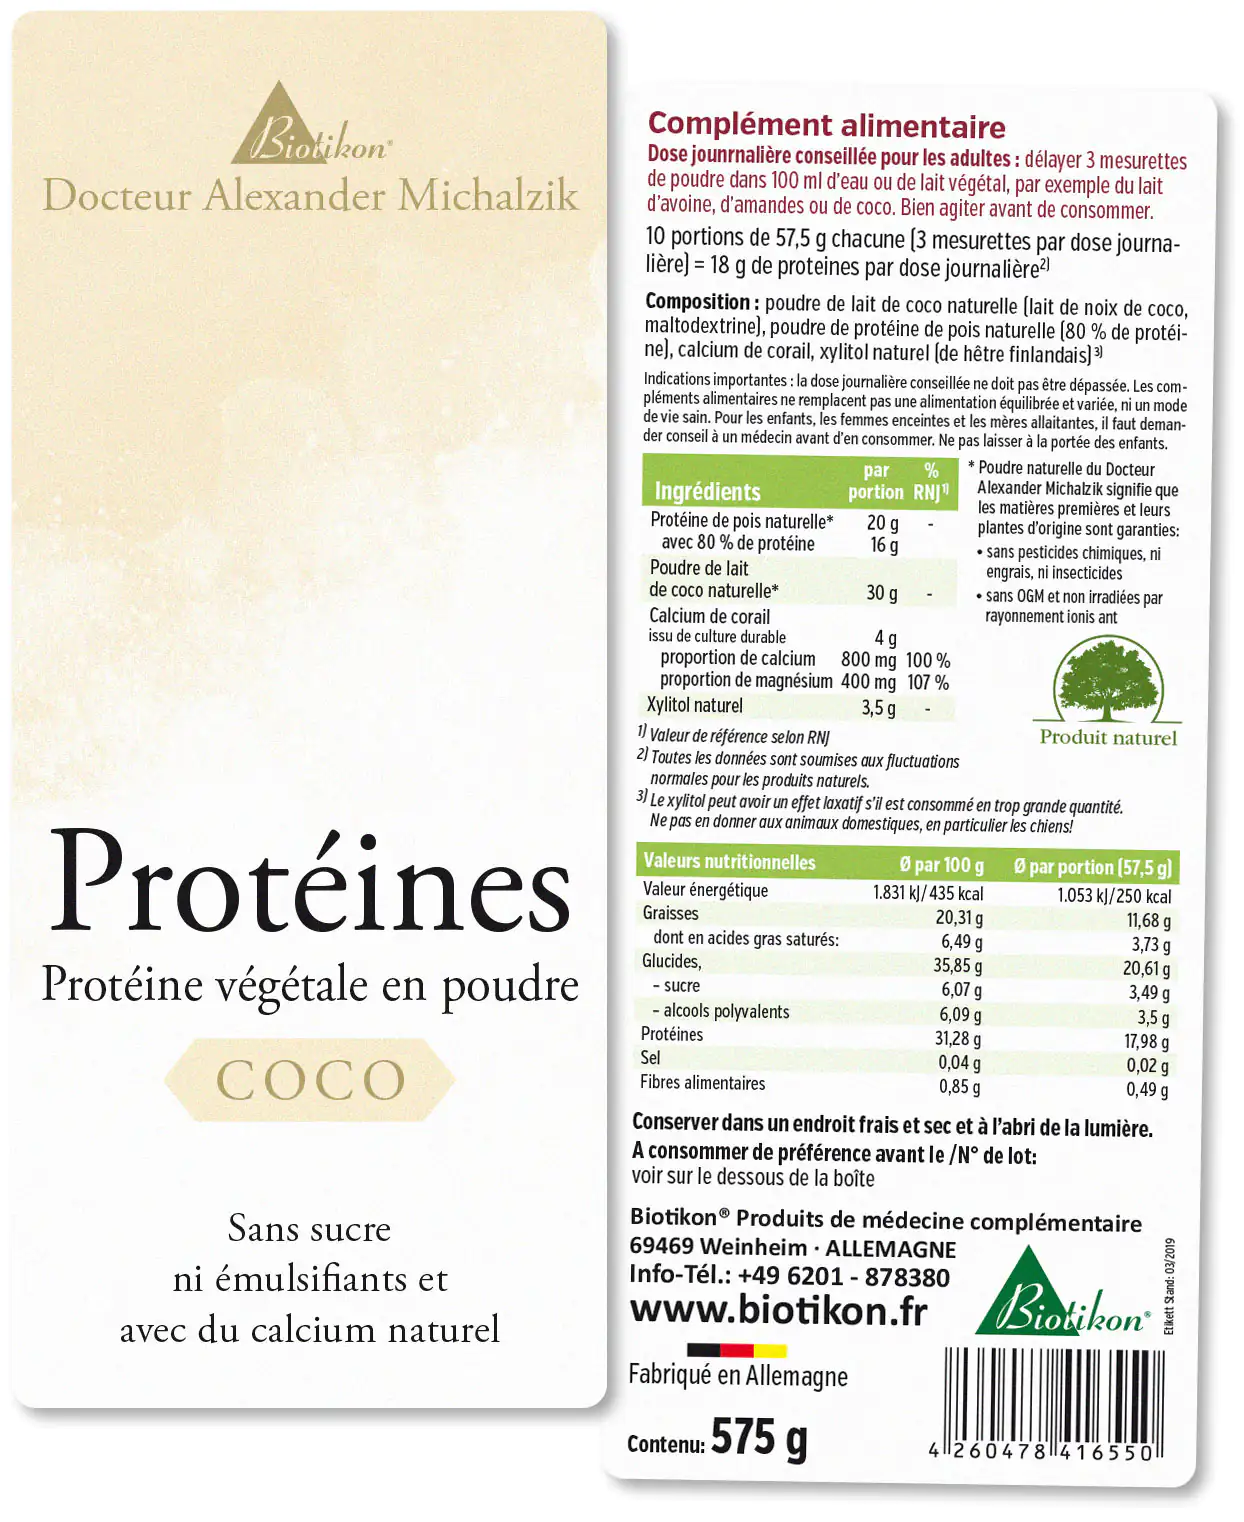 Protéines - en lot de 3, Cacao